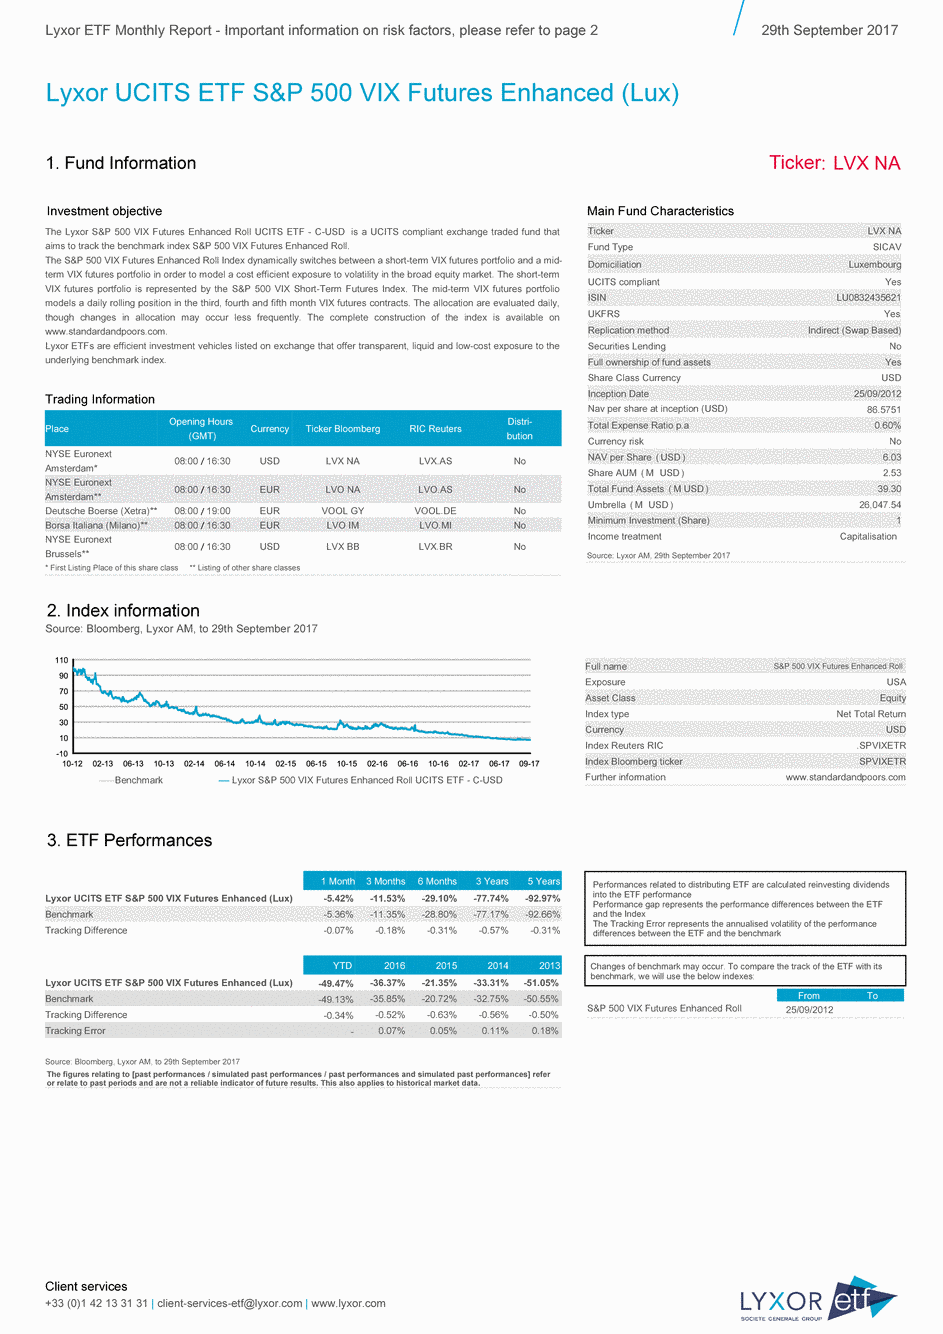 Reporting Lyxor UCITS ETF S&P 500 VIX Futures Enhanced Roll - C-USD - 29/09/2017 - Anglais